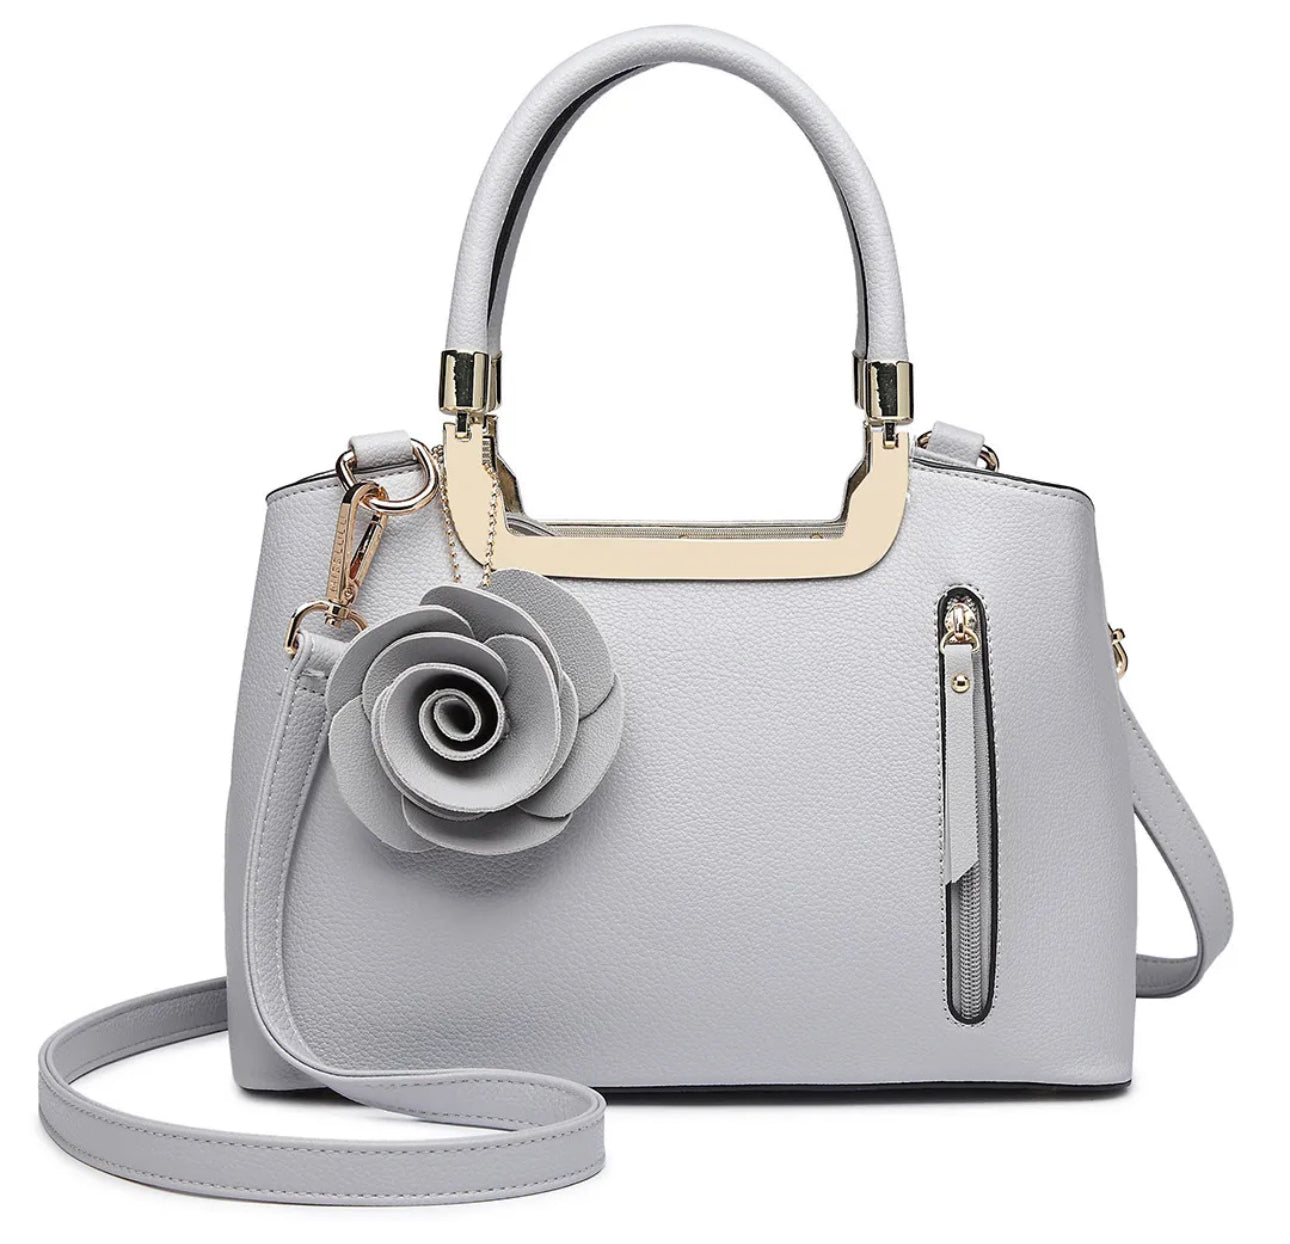 Faux Leather Handbag with Floral Design